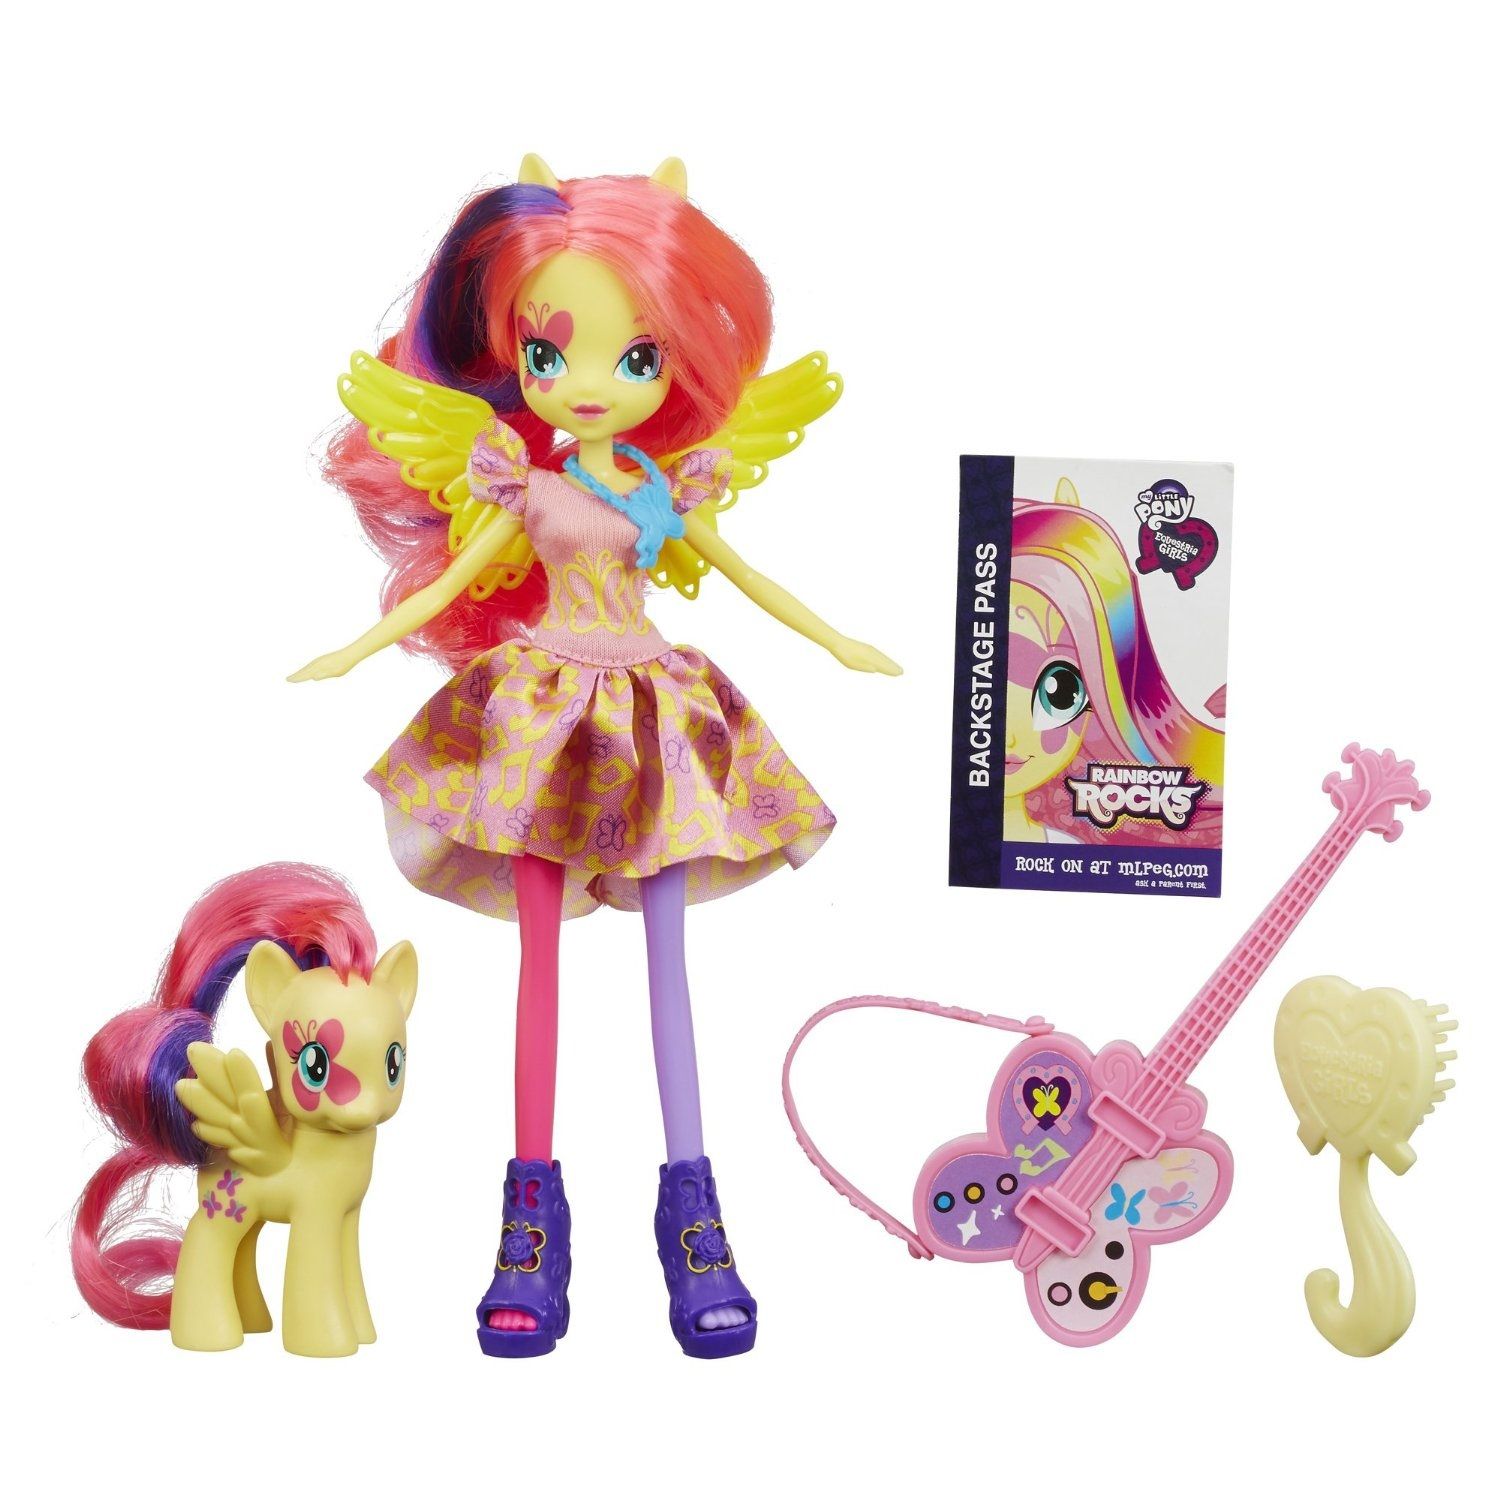 Куклы my little pony. Флаттершай Rainbow Rocks кукла. Кукла Fluttershy Hasbro Equestria girls. My little Pony куклы флатер Шай. Куклы Эквестрия гёрлз Rainbow Rocks.